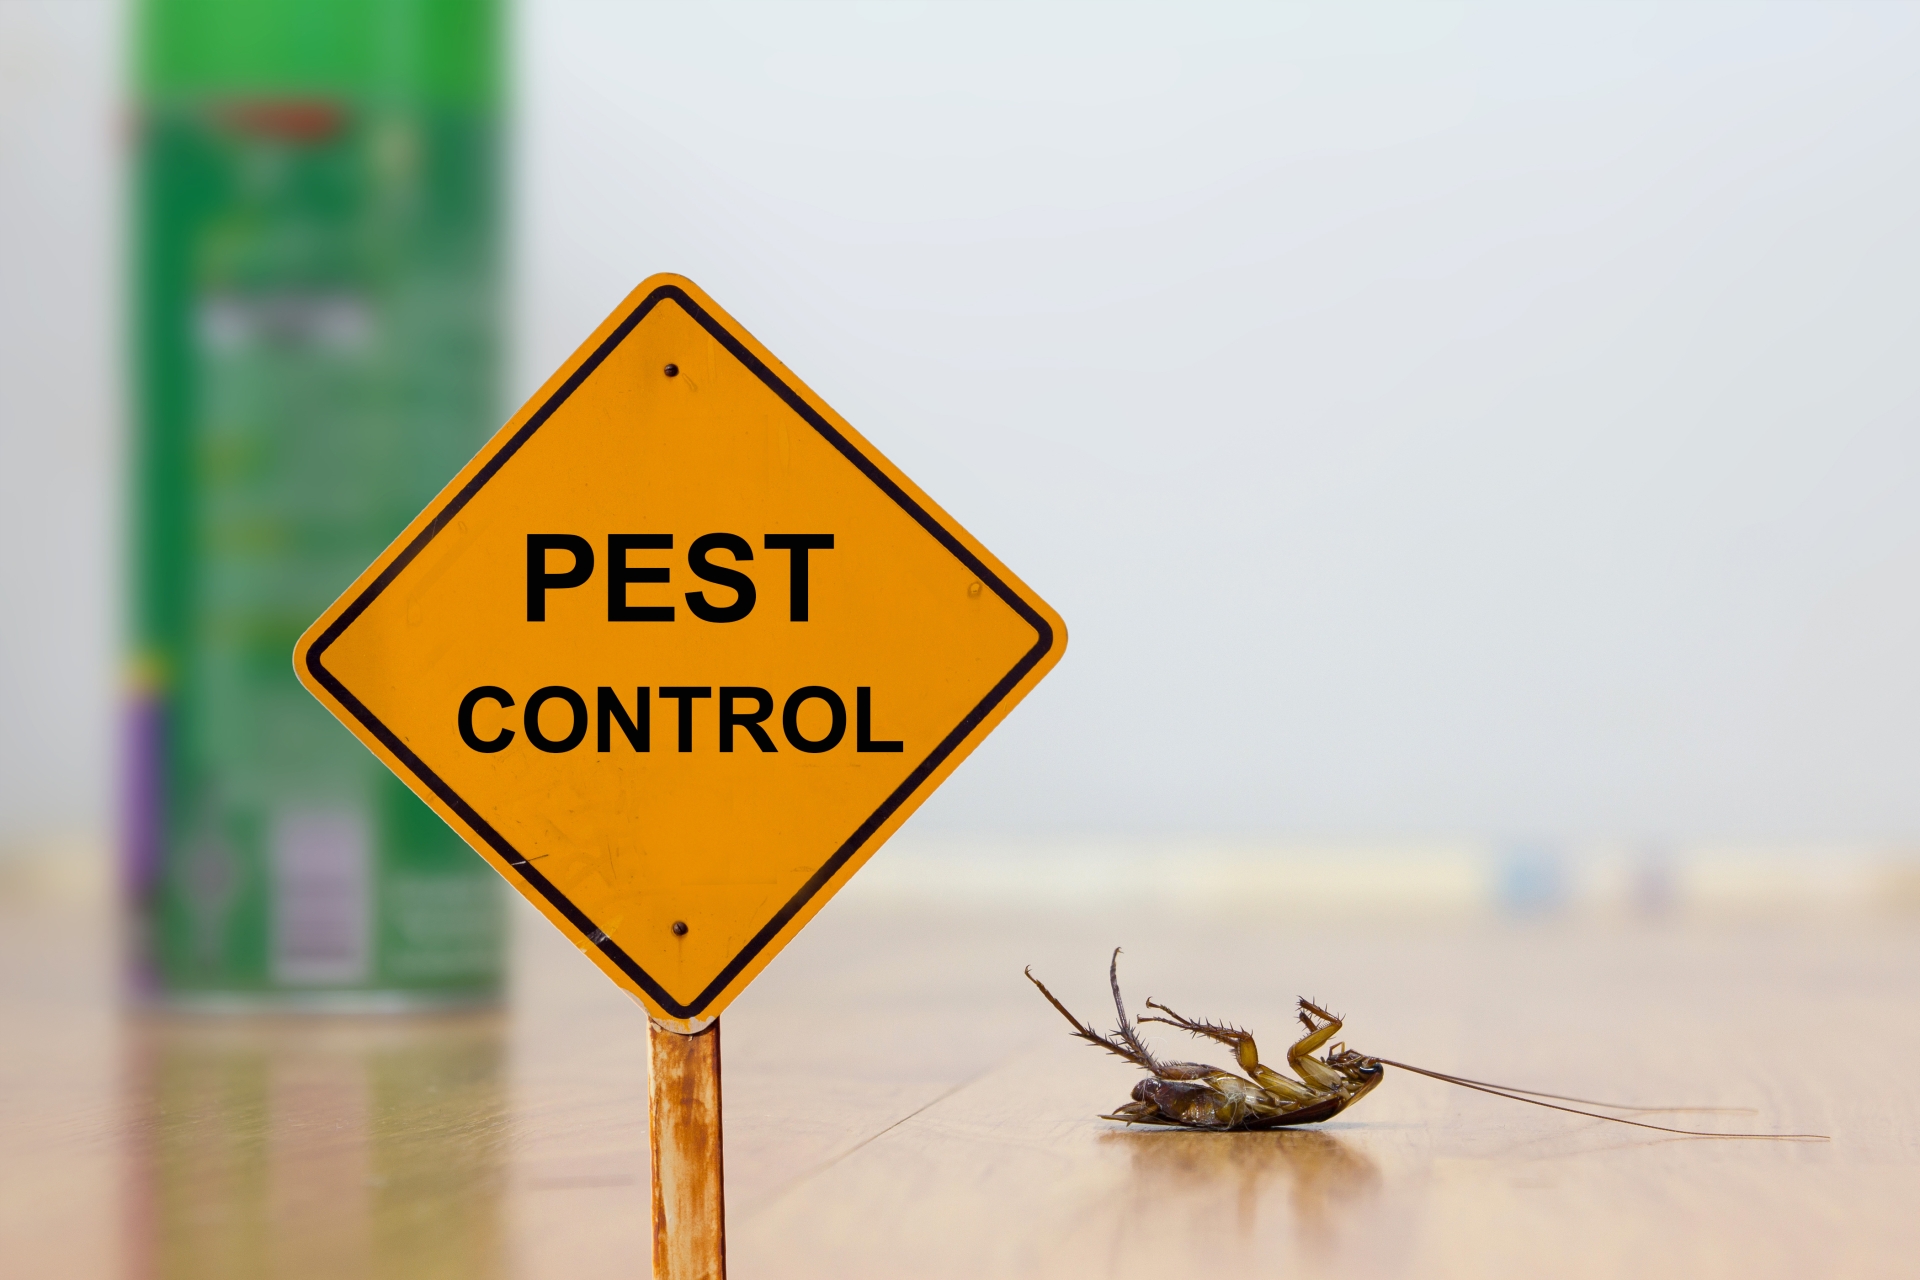 24 Hour Pest Control, Pest Control in Dalston, E8. Call Now 020 8166 9746